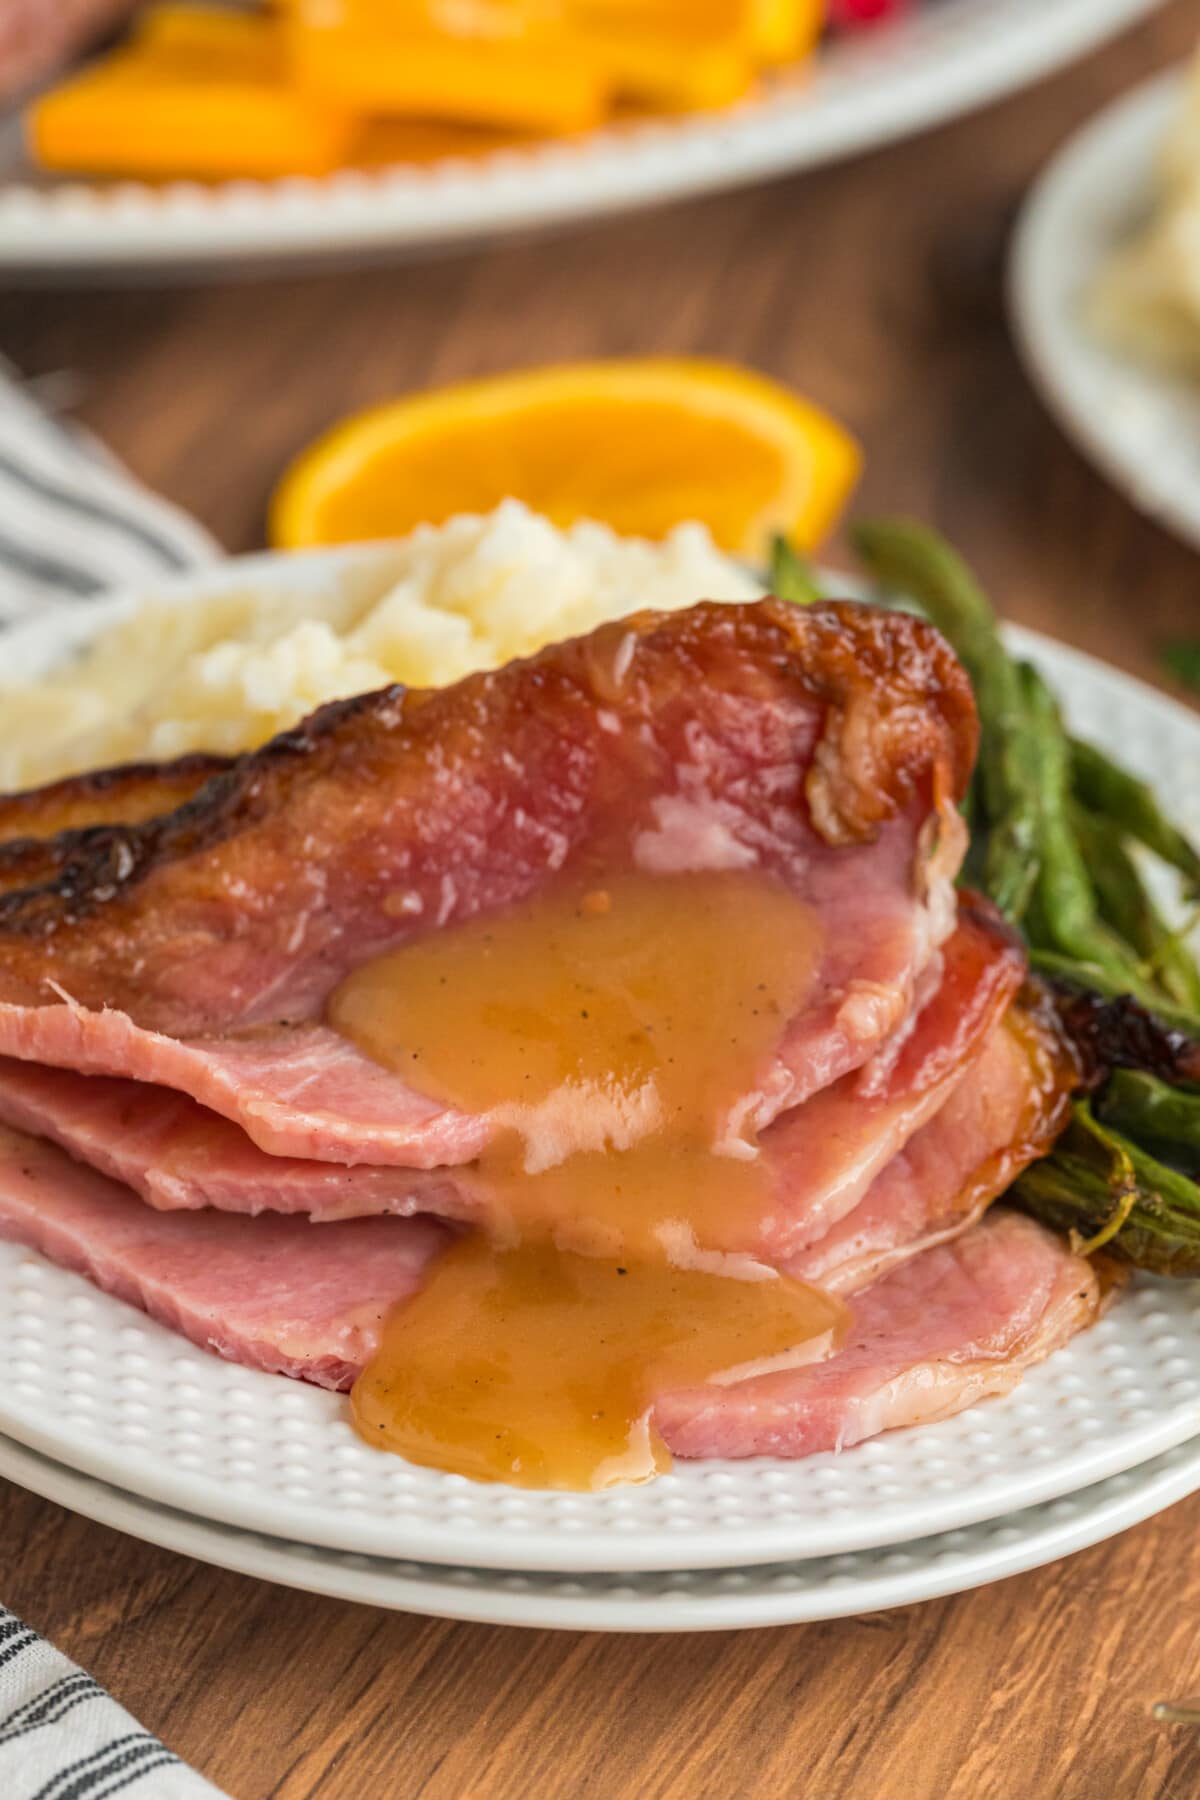 Orange Glazed Ham slices with gravy on a plate